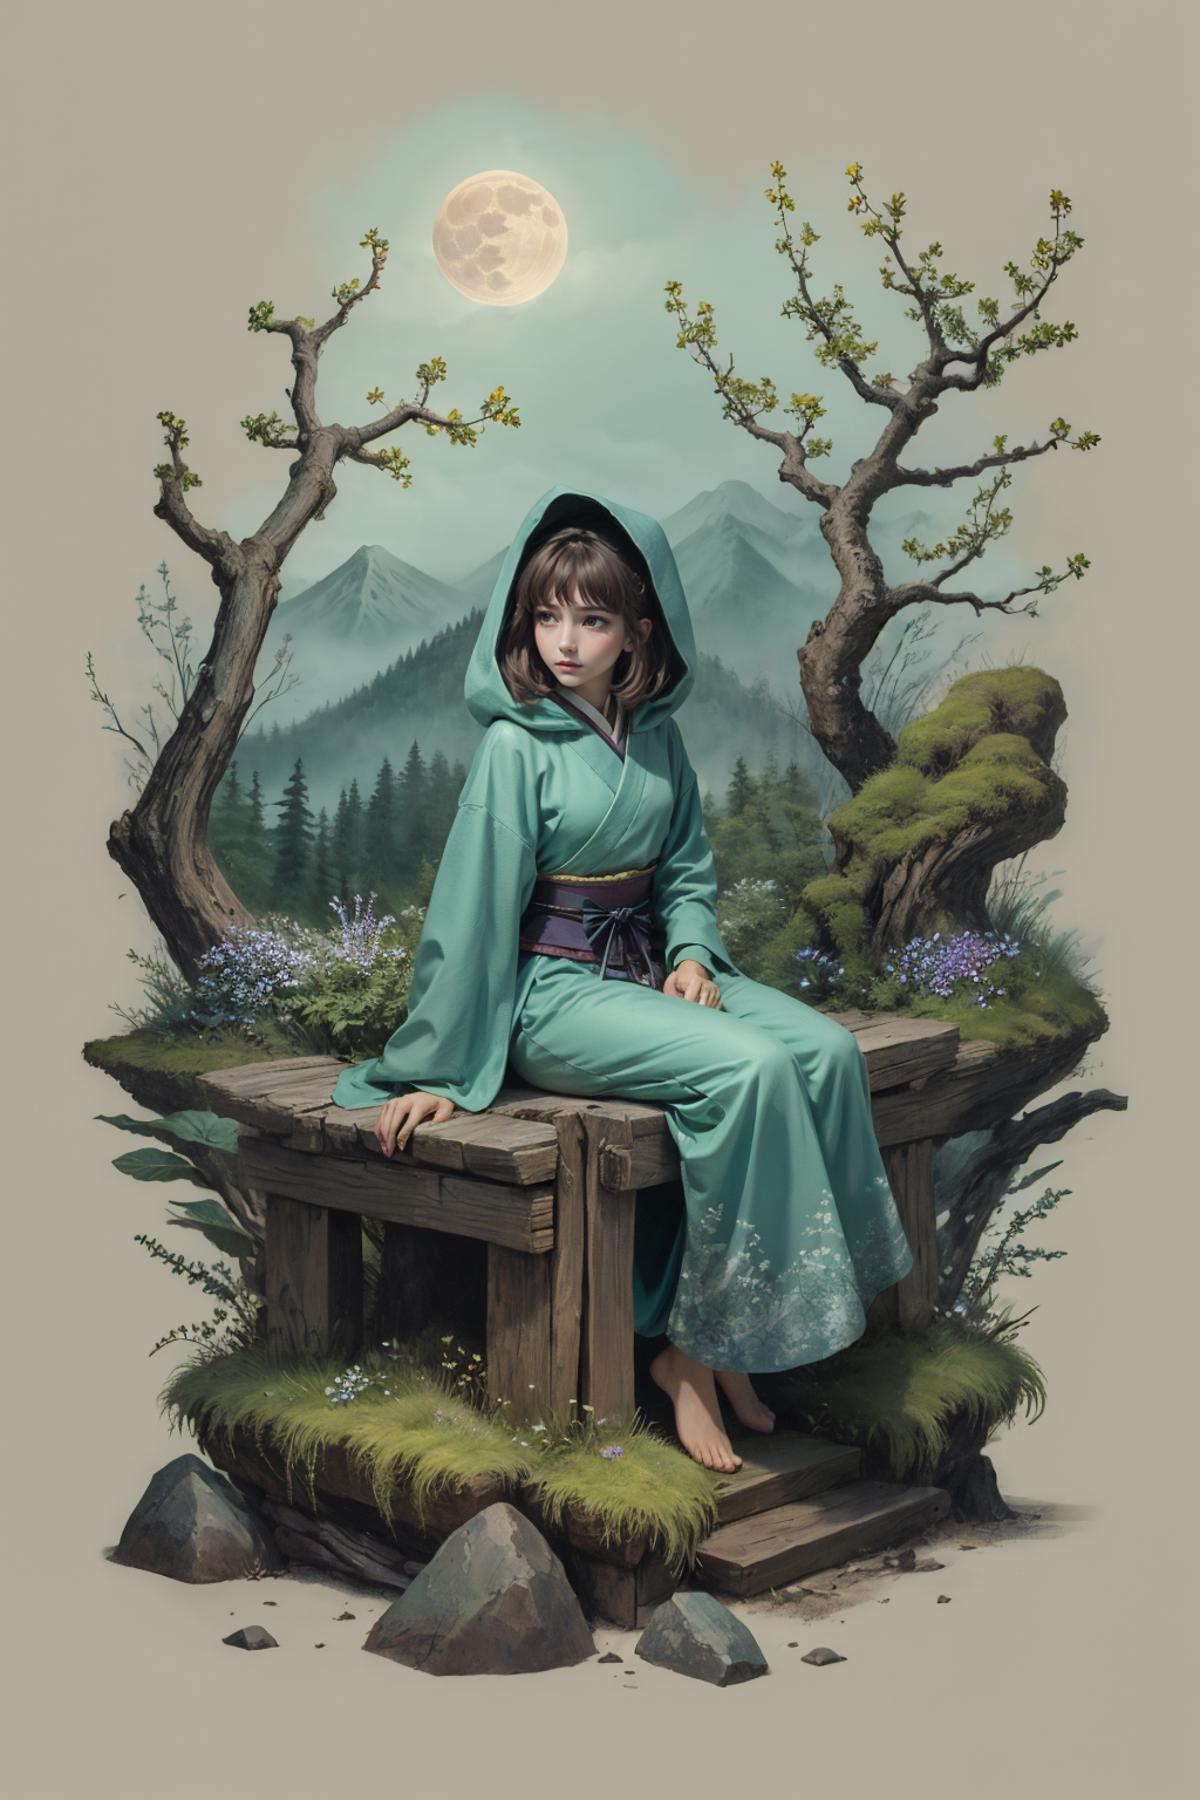 A woman wearing a green kimono sitting on a wooden bench.